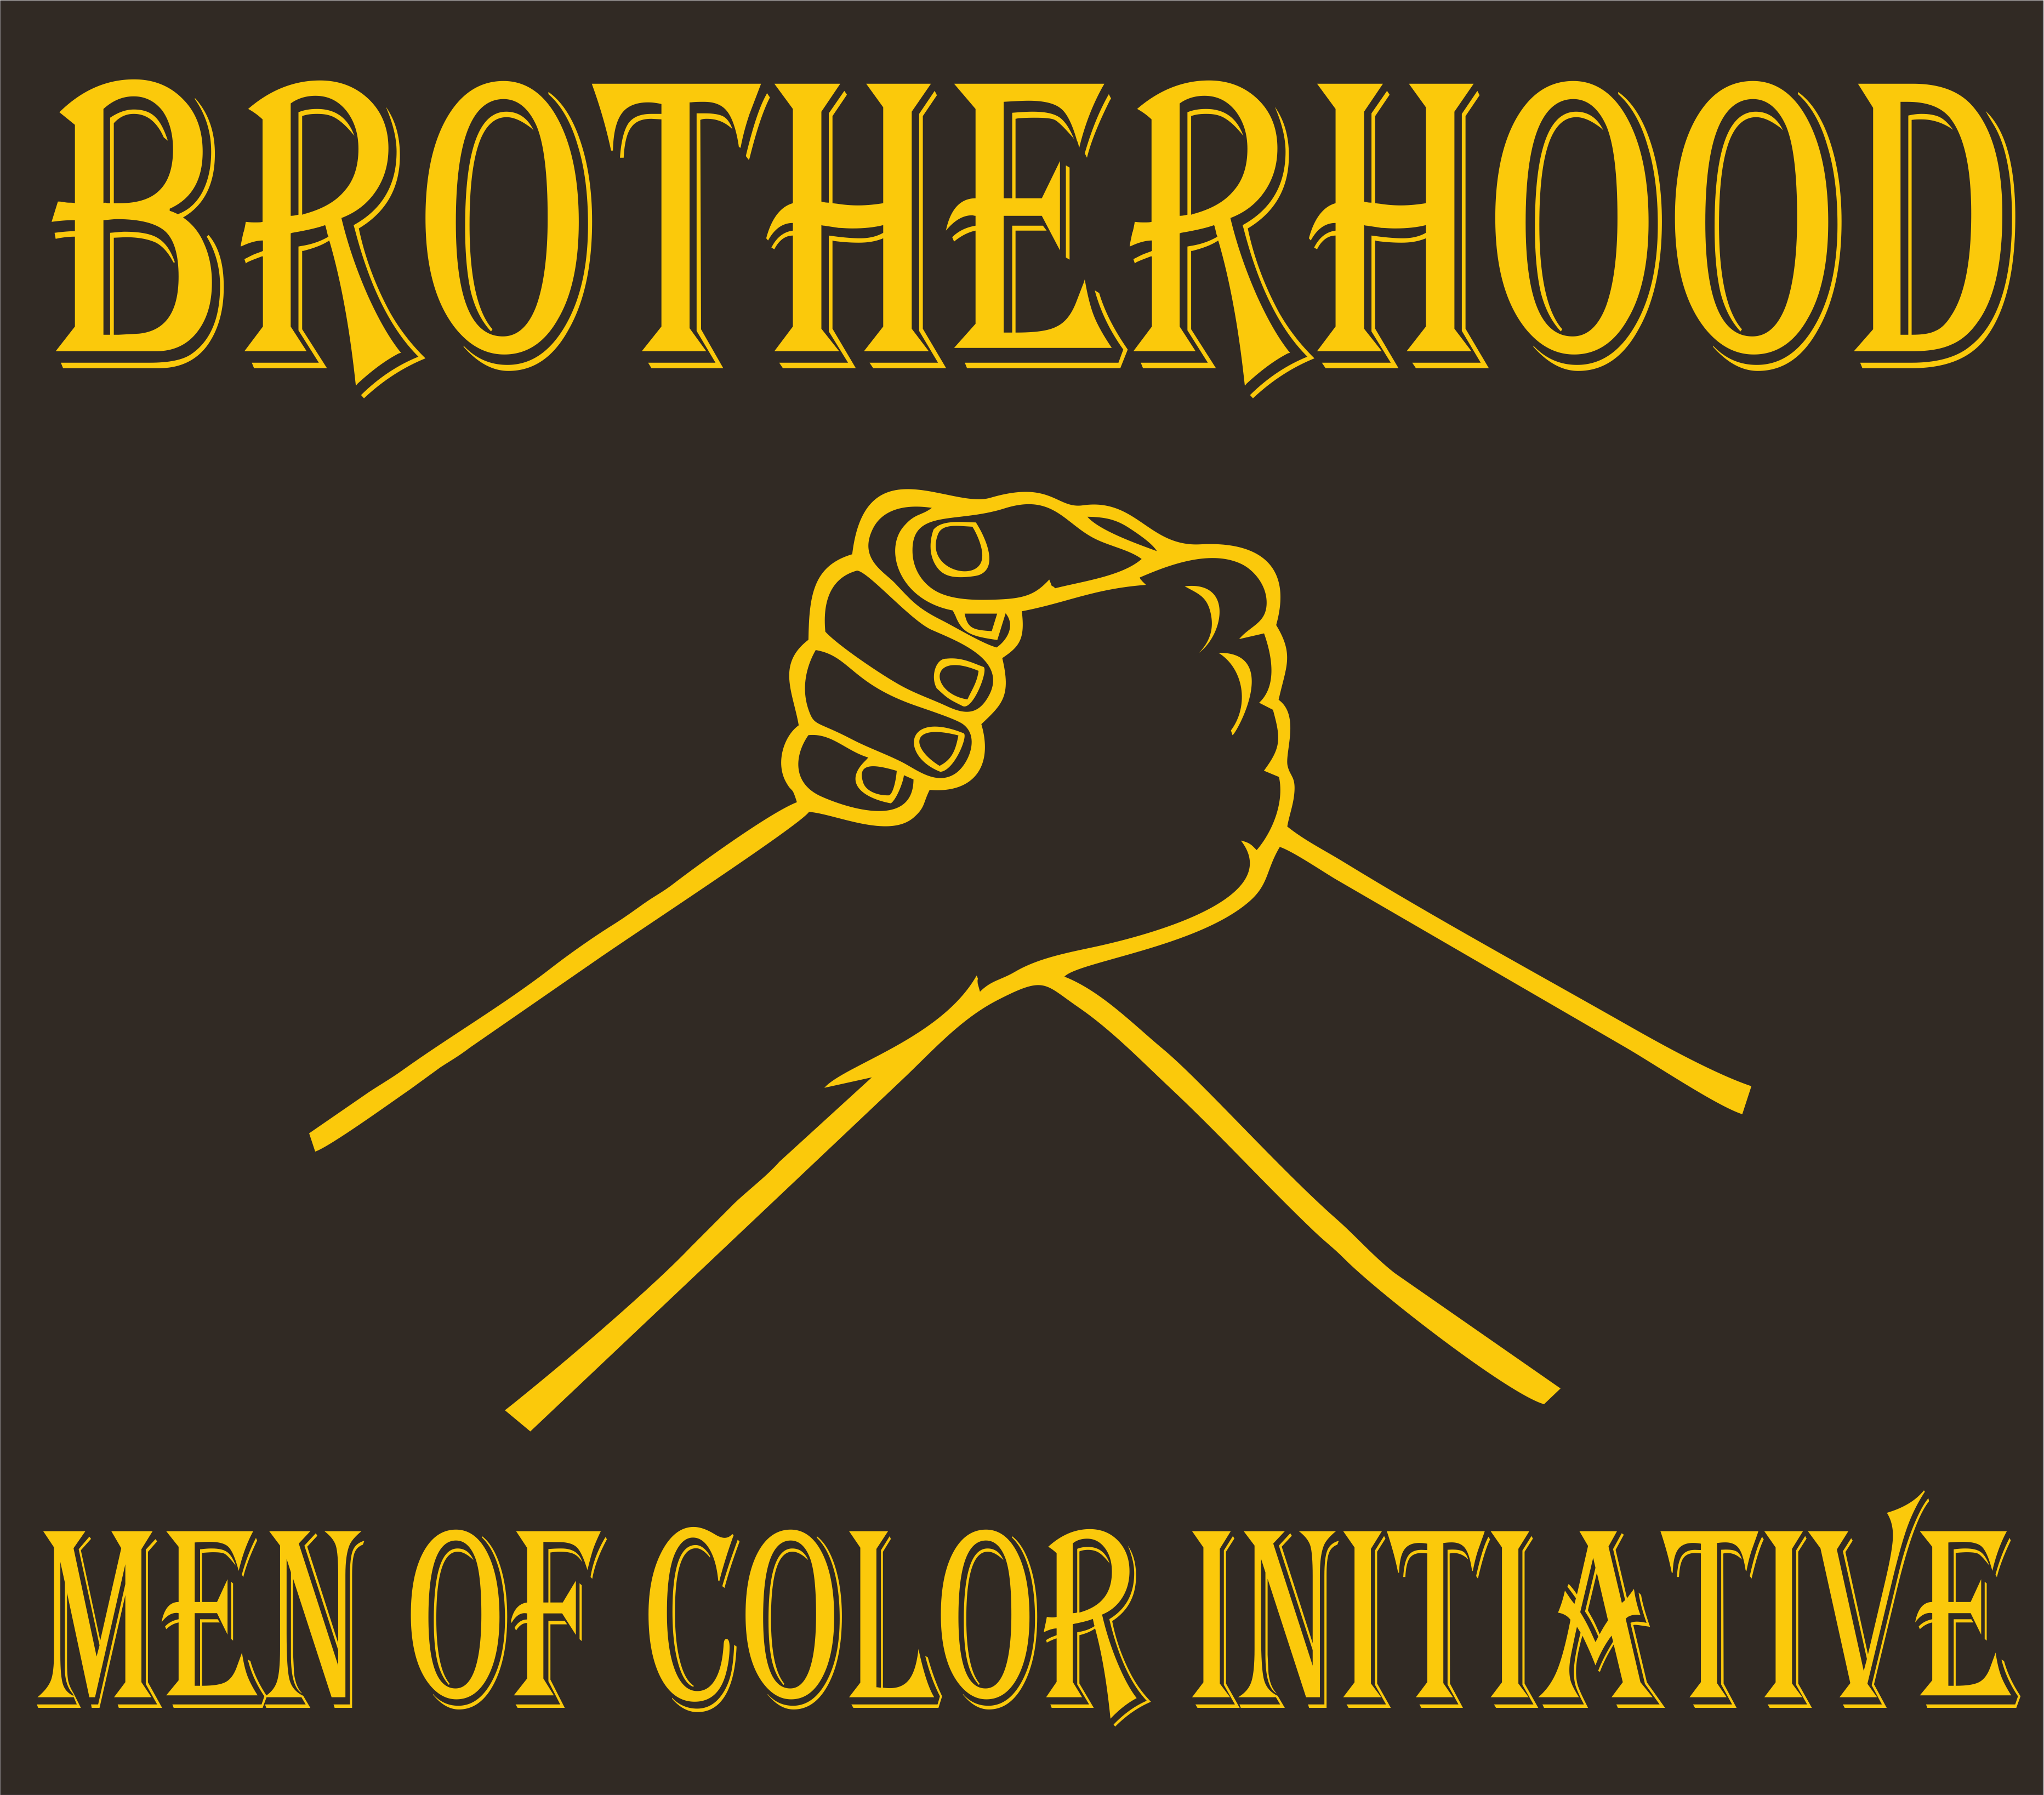 Amazing BrOTHERHOOD Pictures & Backgrounds